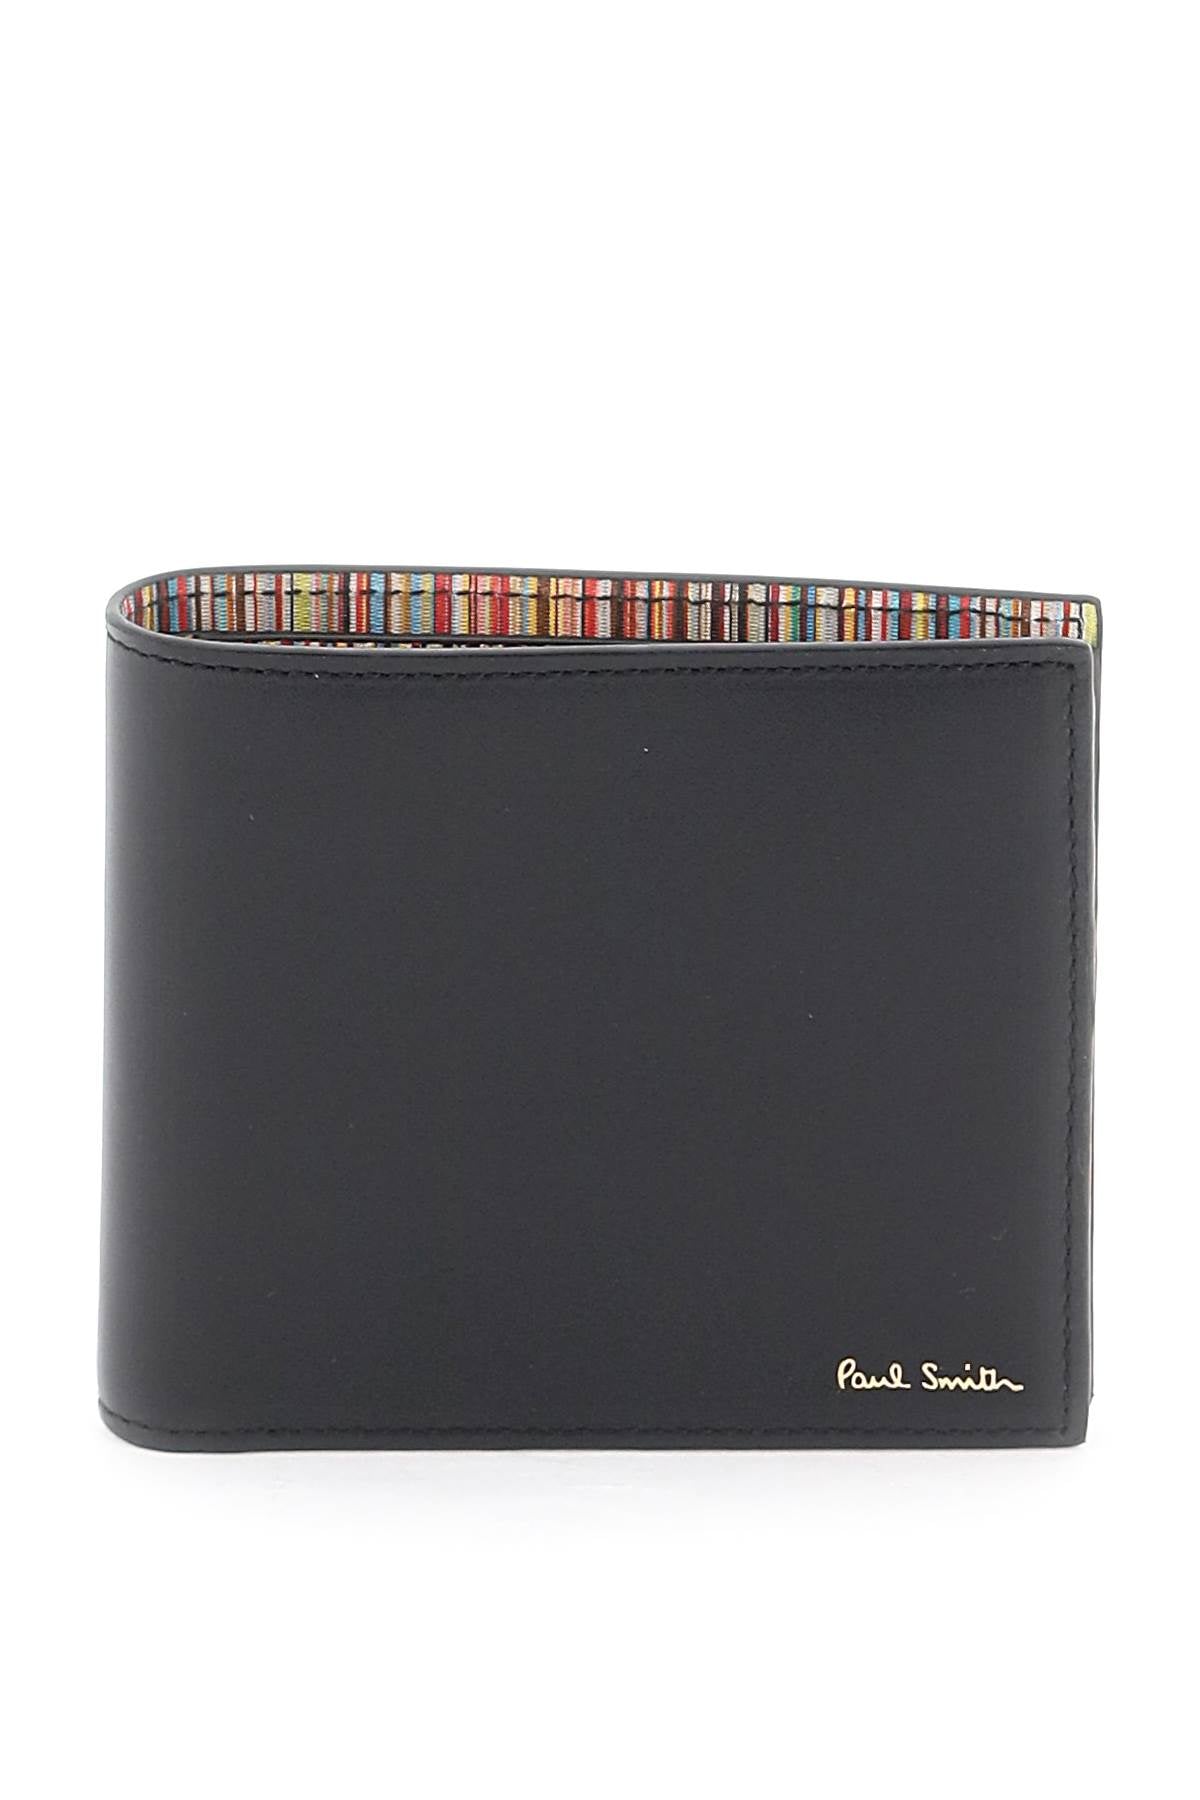 Paul smith signature stripe bifold wallet-0